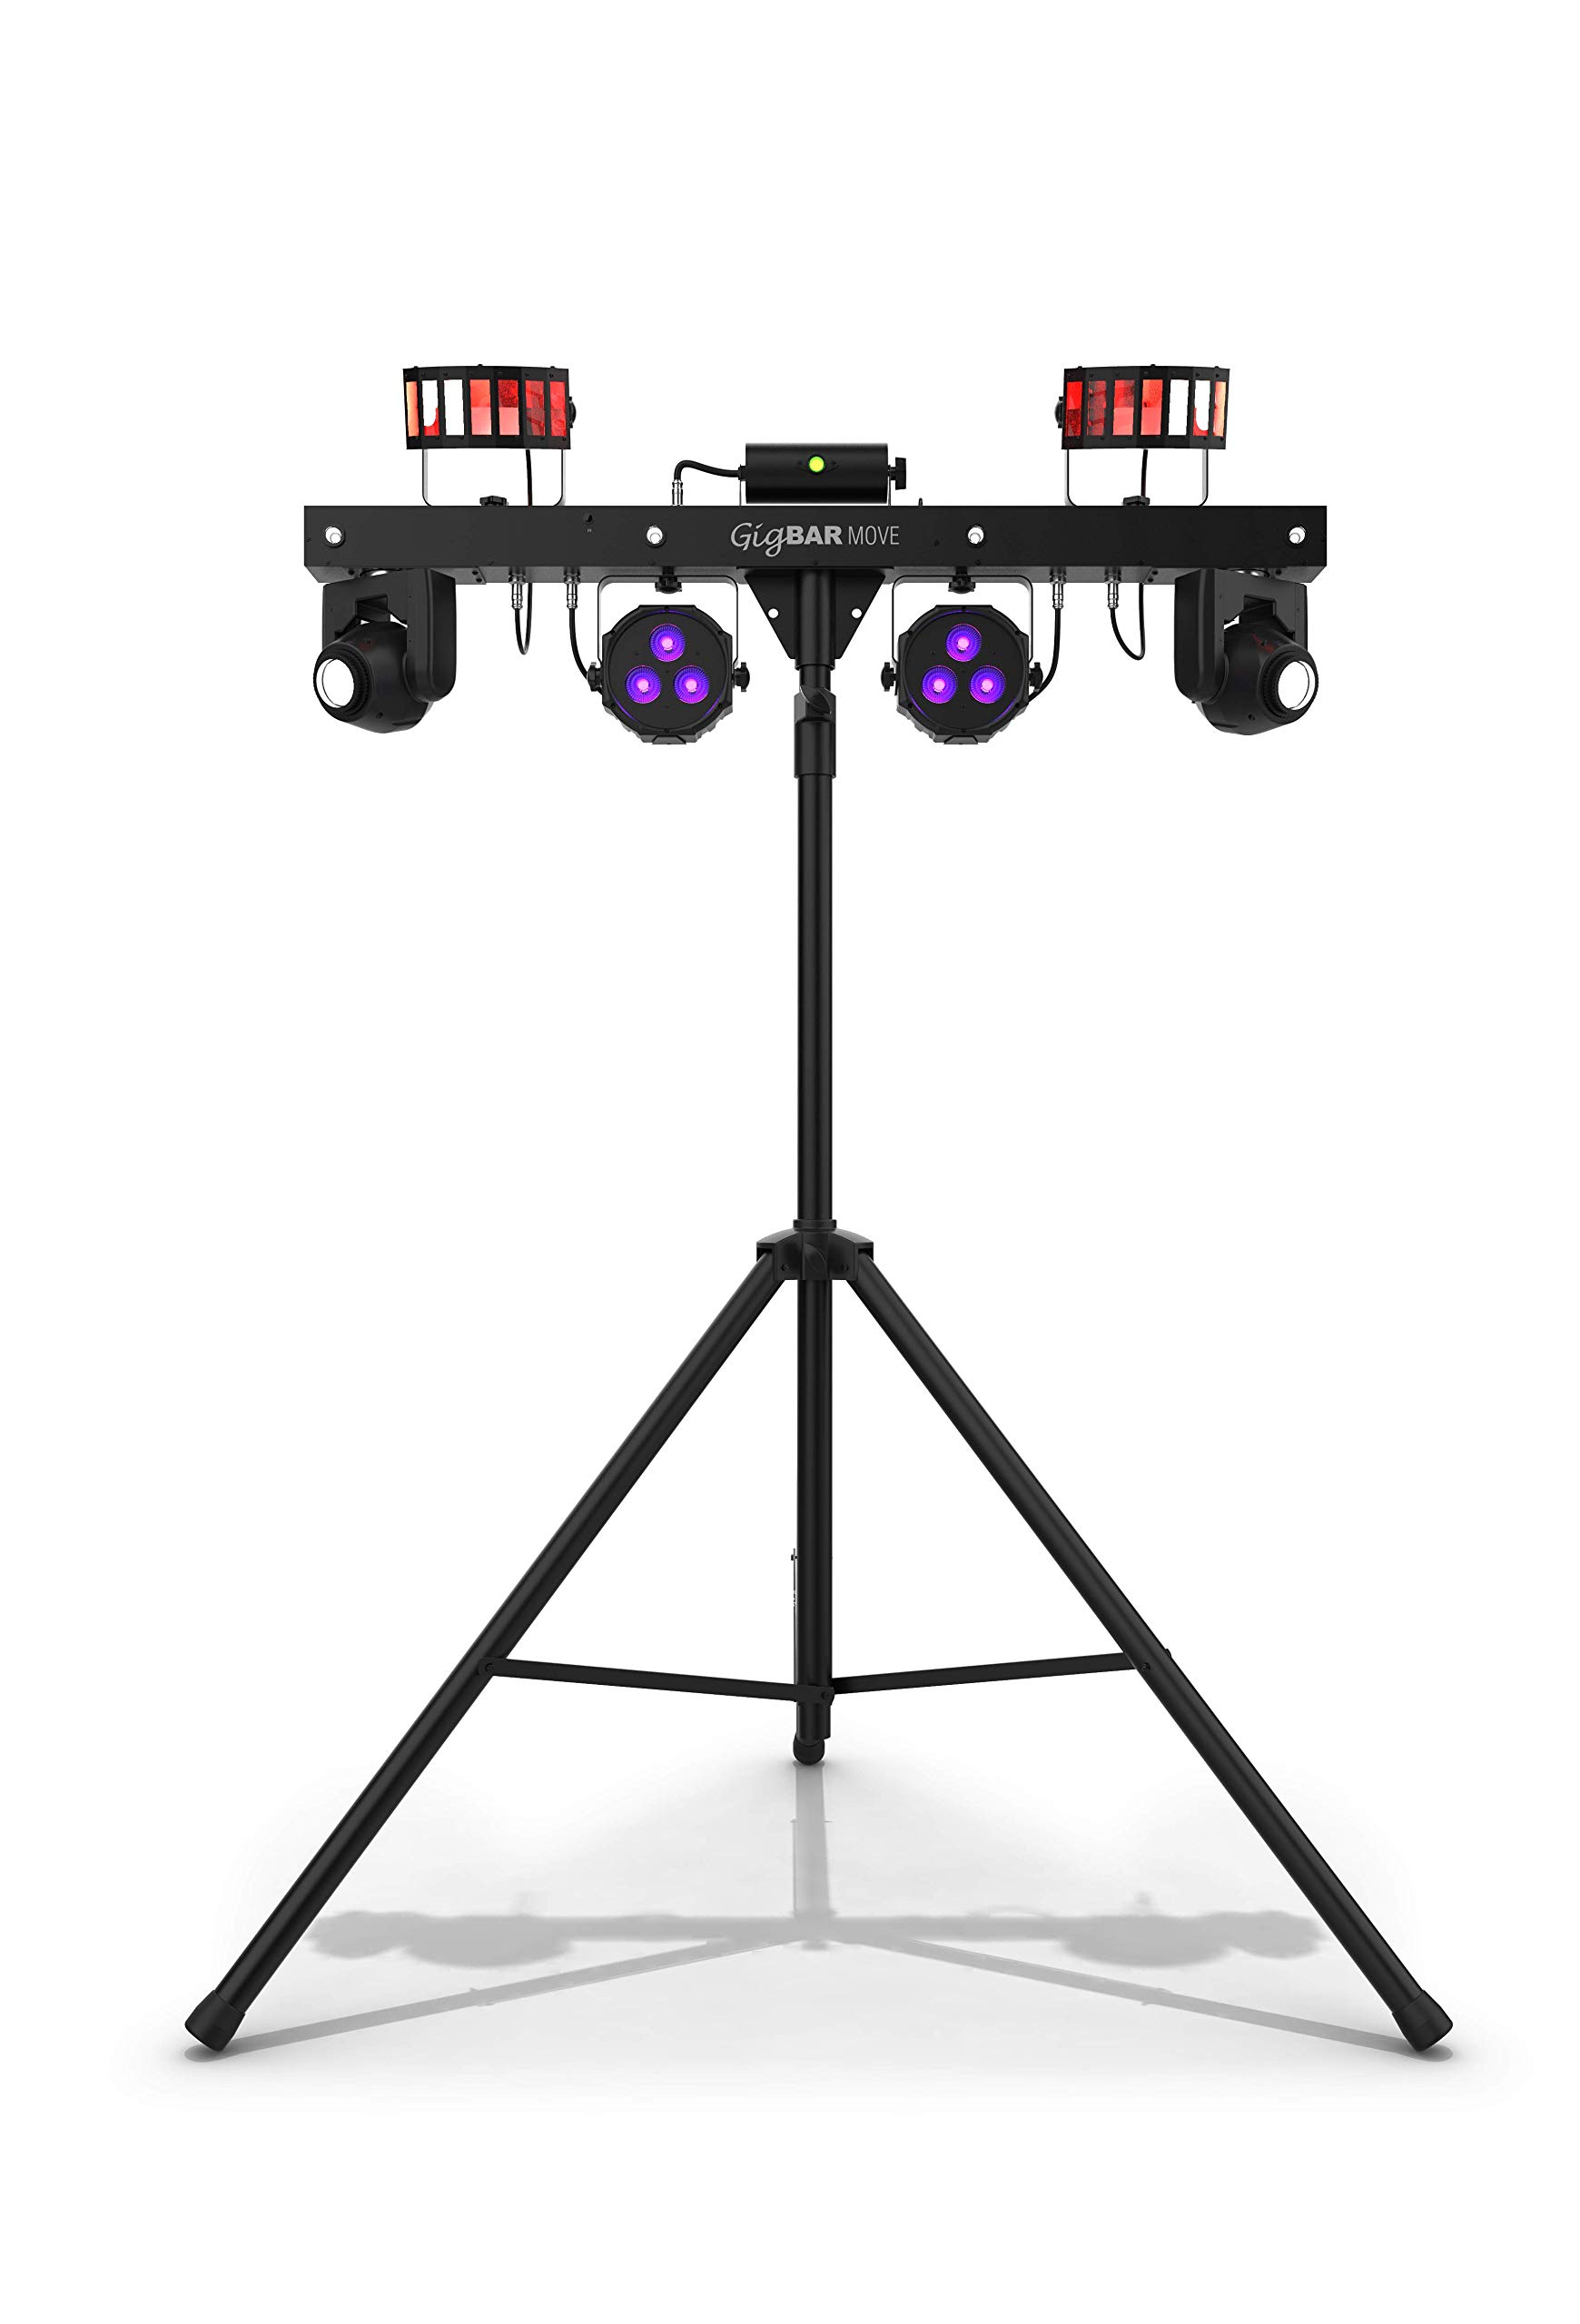 Chauvet DJ GigBAR MOVE 带无线耳塞的 5 合 1 灯光系统...